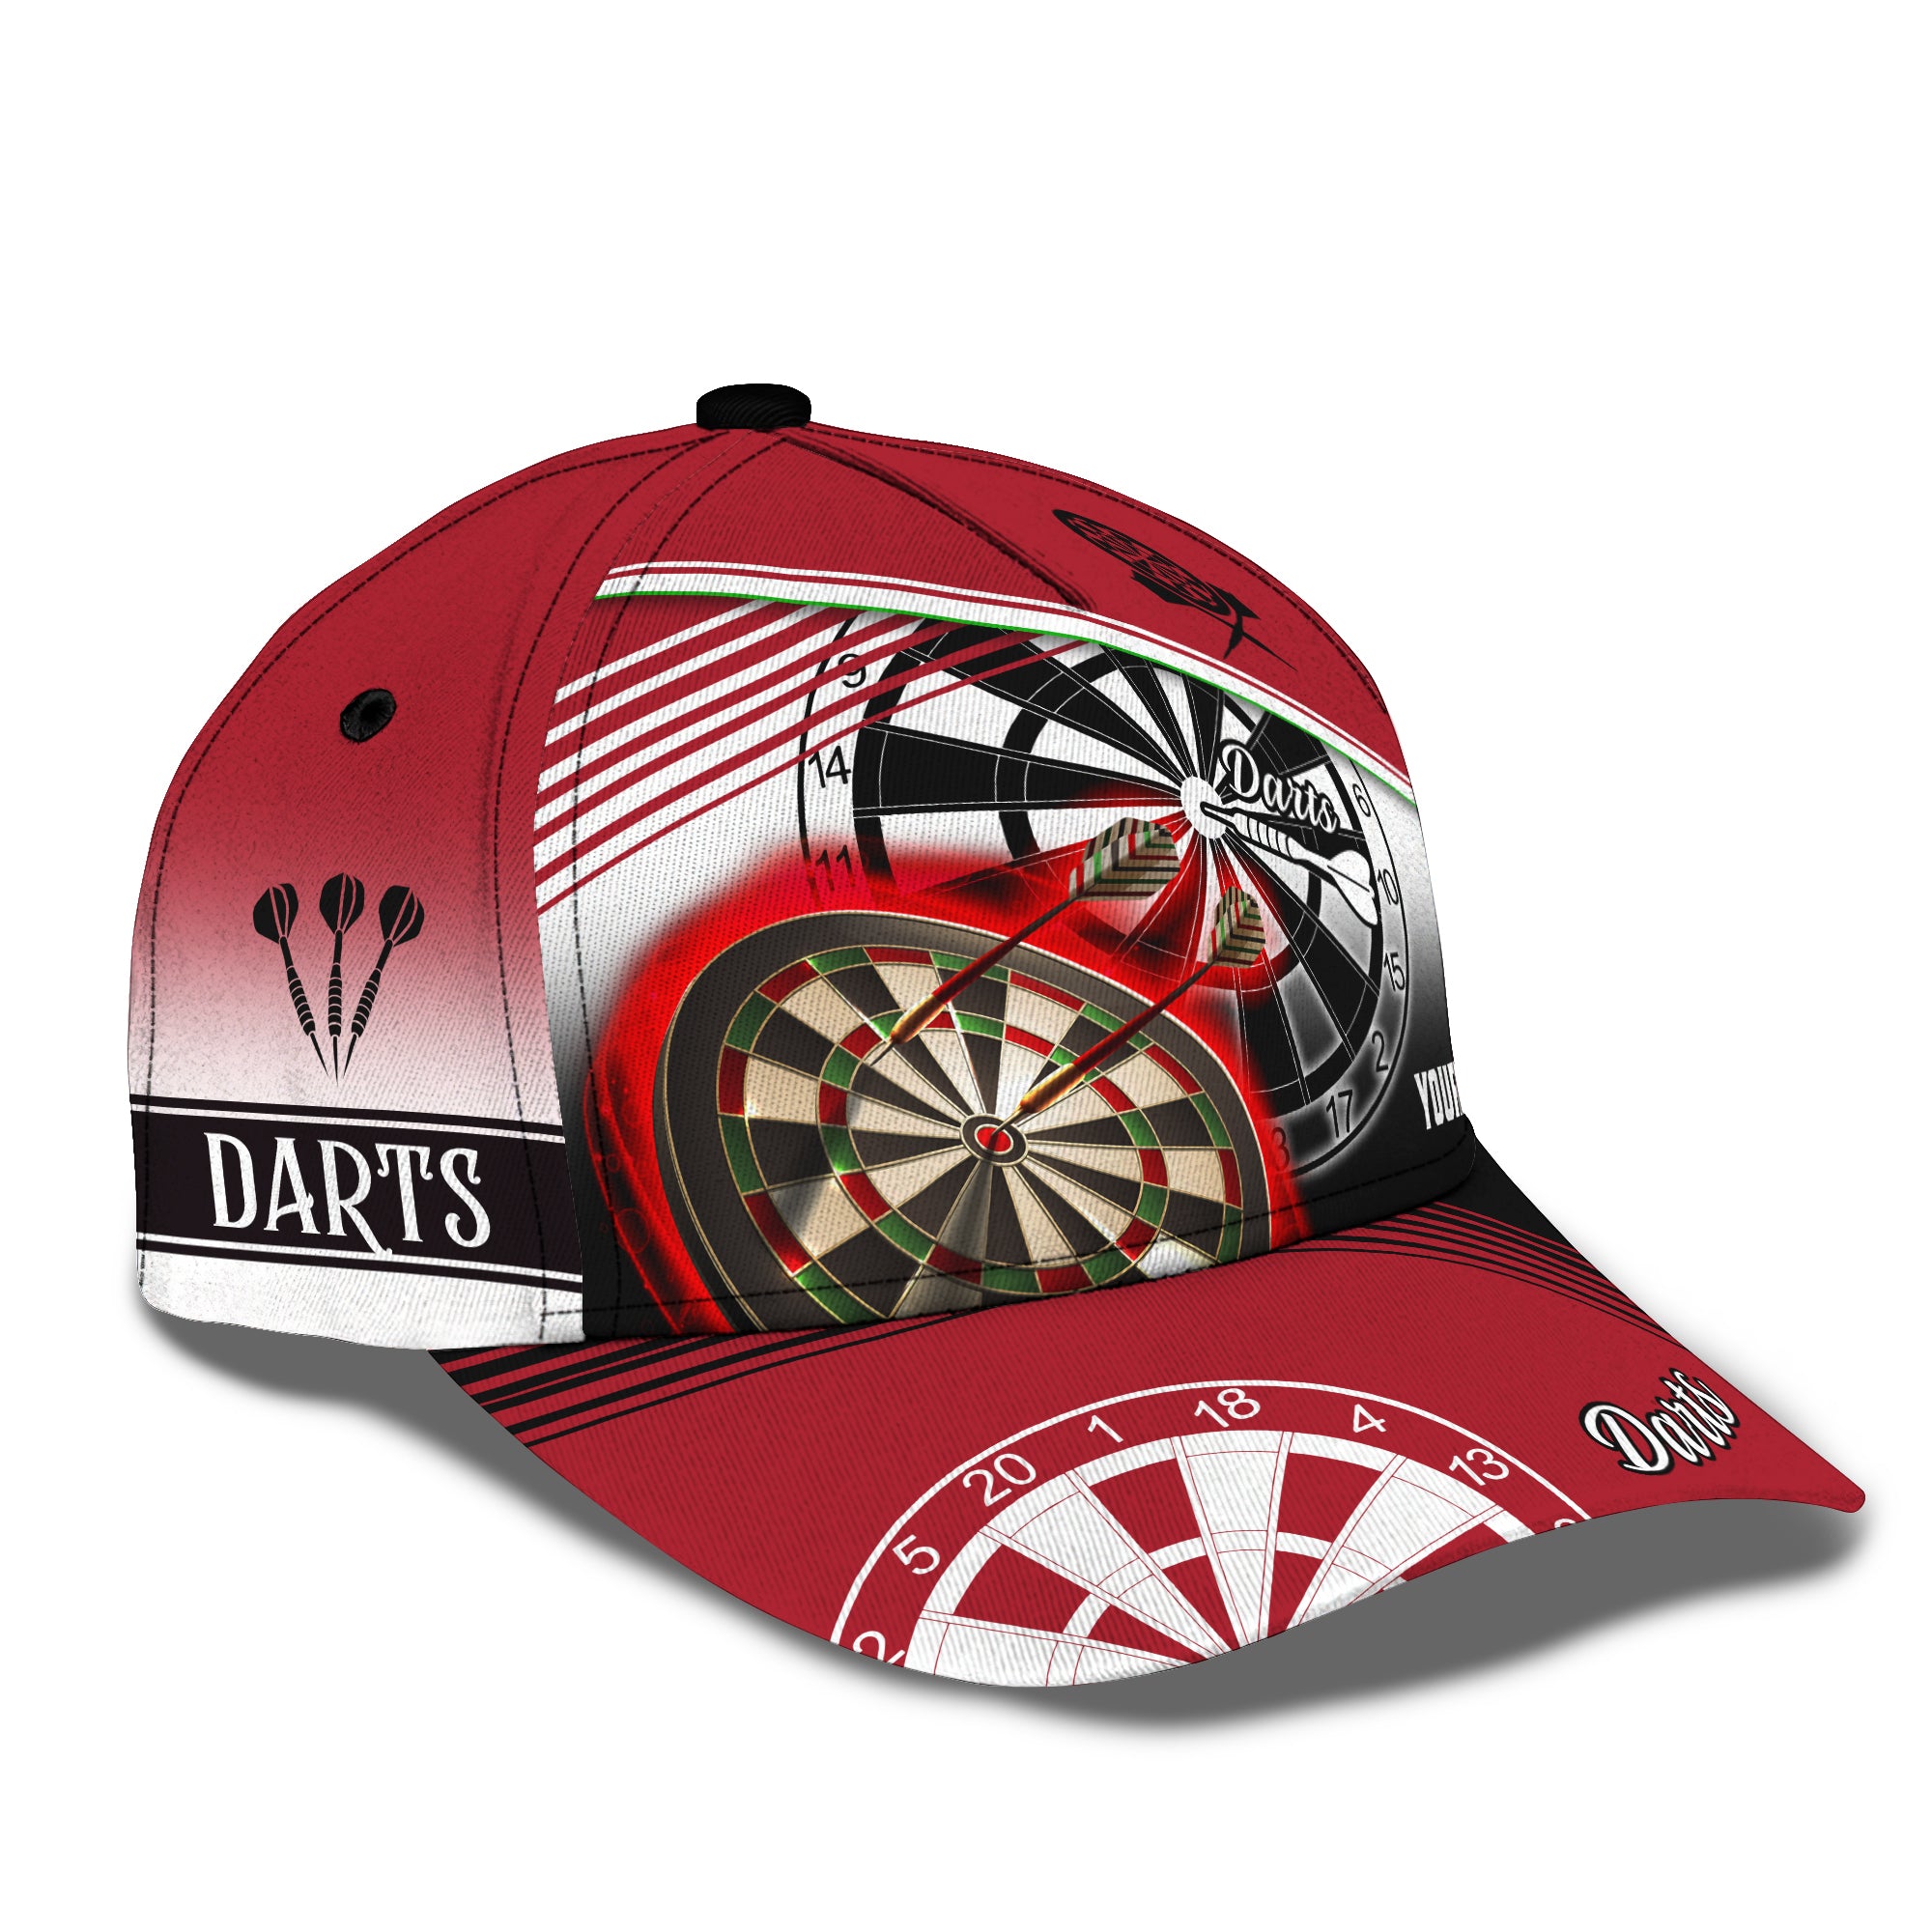 Darts - Personalized Name Cap - Hadn